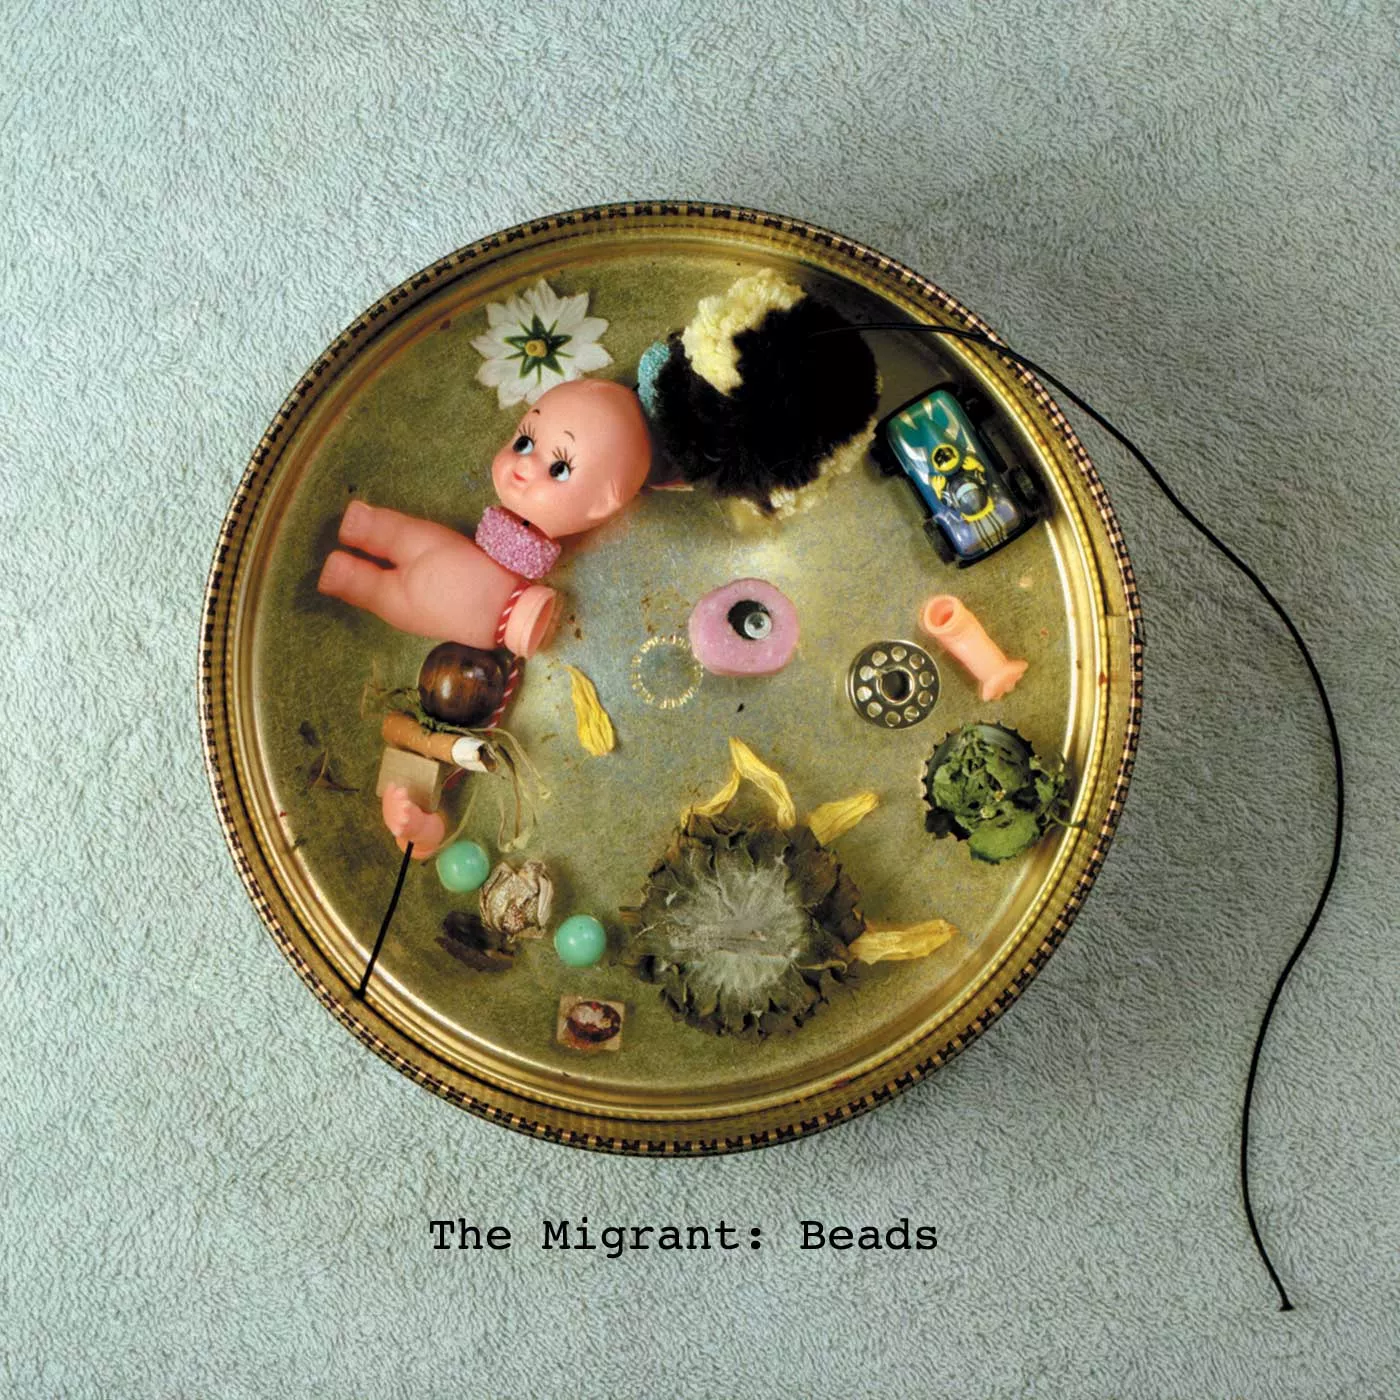 Beads - The Migrant